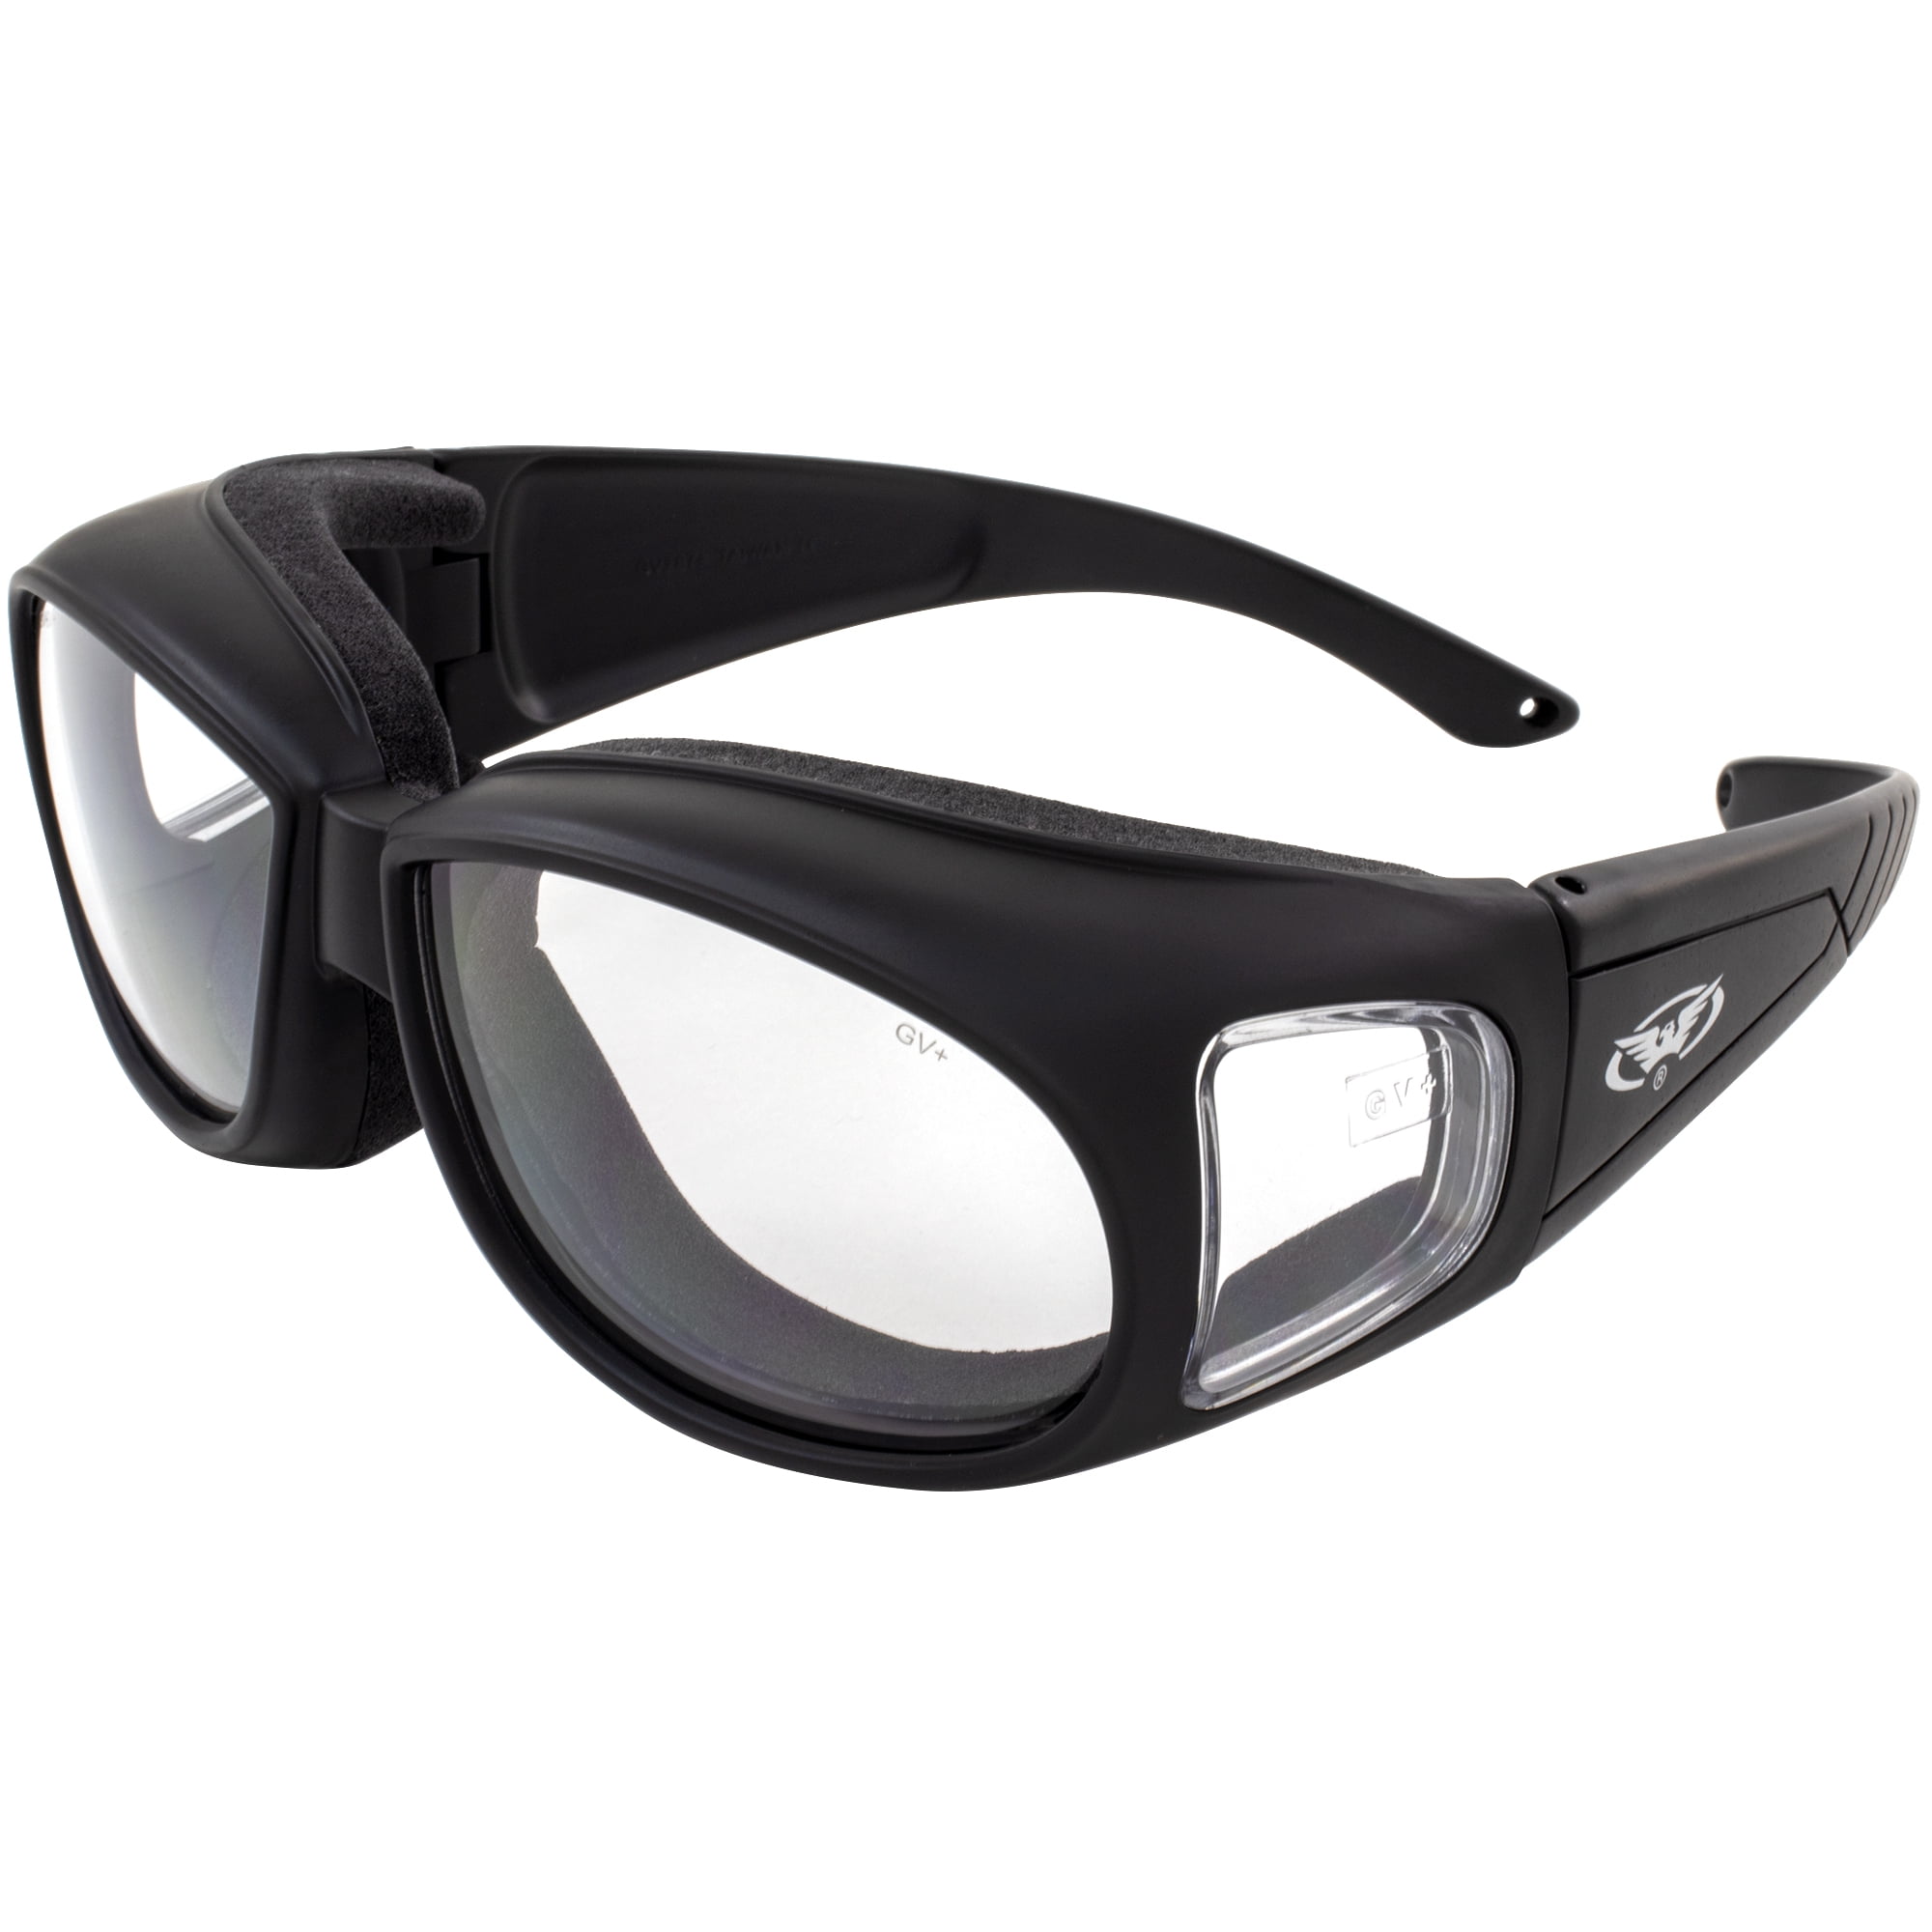 Global Vision Eyewear Eliminator Deluxe Anti-Fog Goggles with Storage Bag 